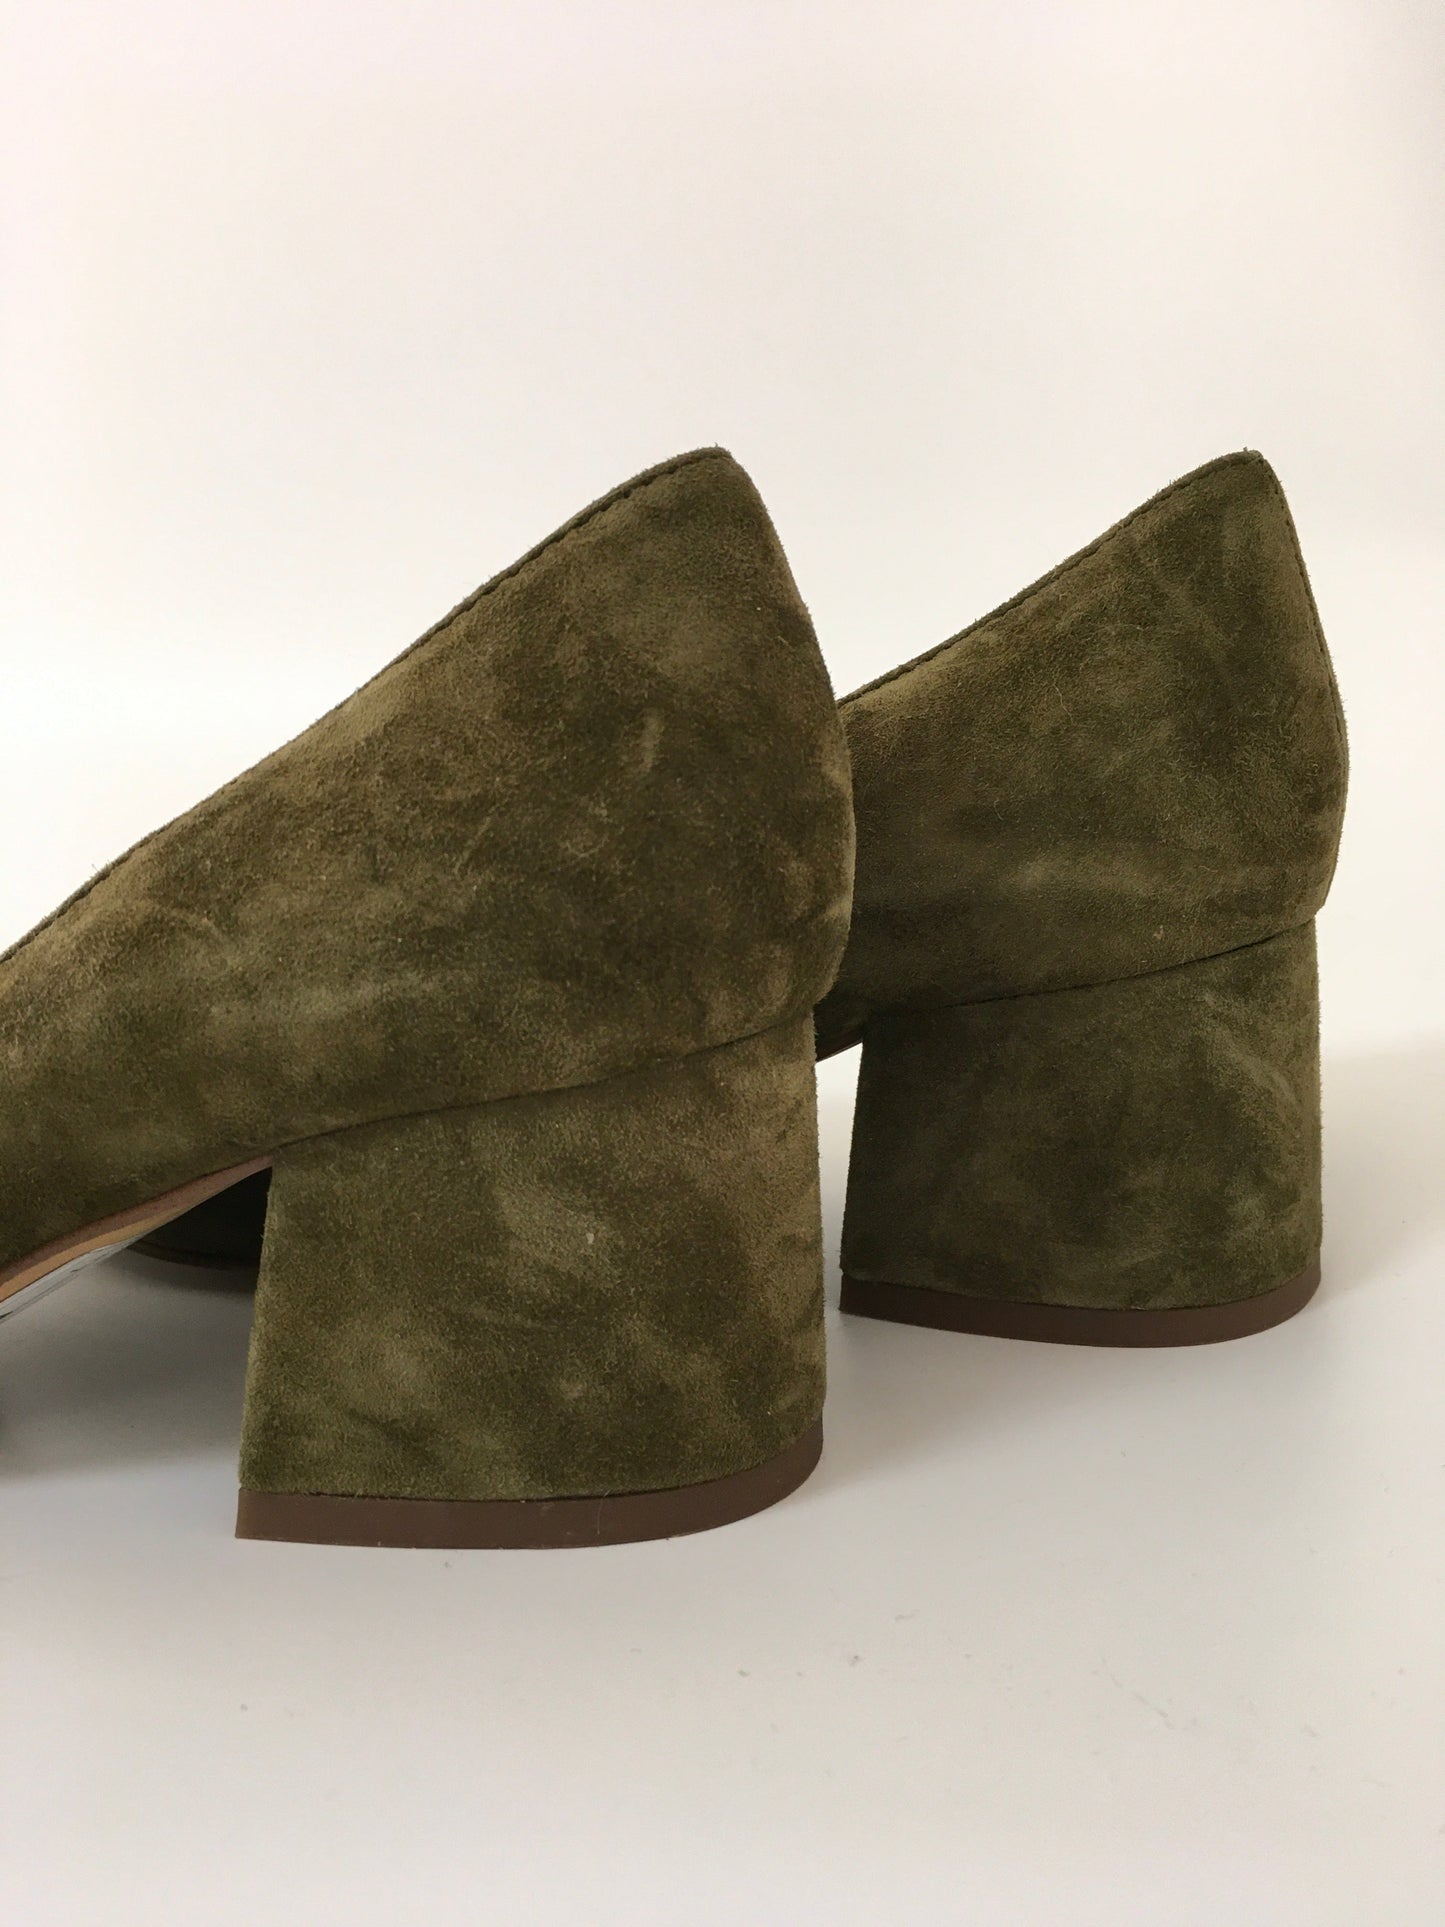 Shoes Heels Block By Franco Sarto  Size: 7